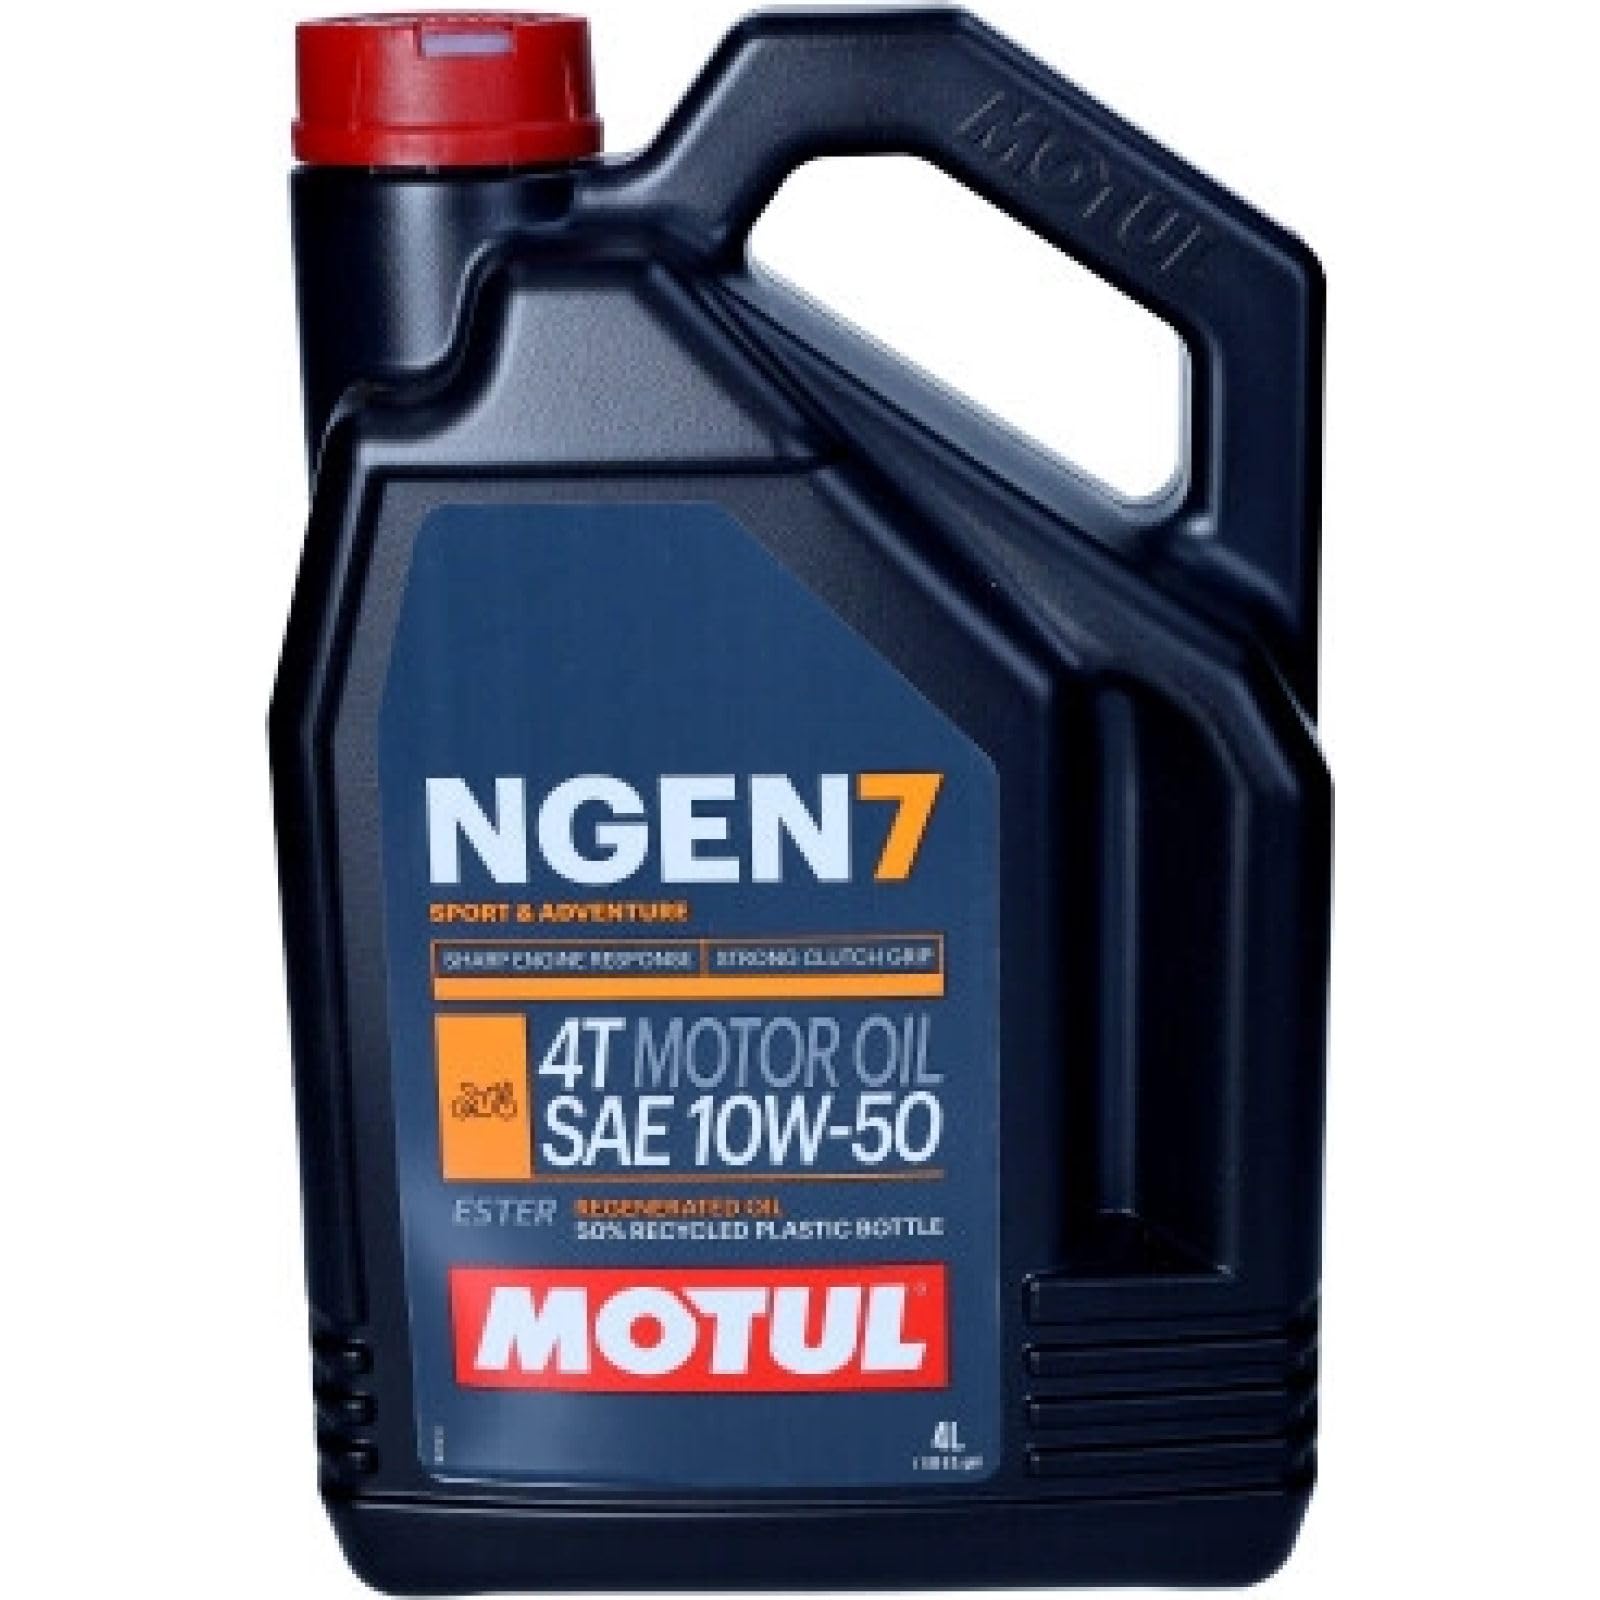 Motul NGEN 7 10W-50 4T 4 Liter von Motul